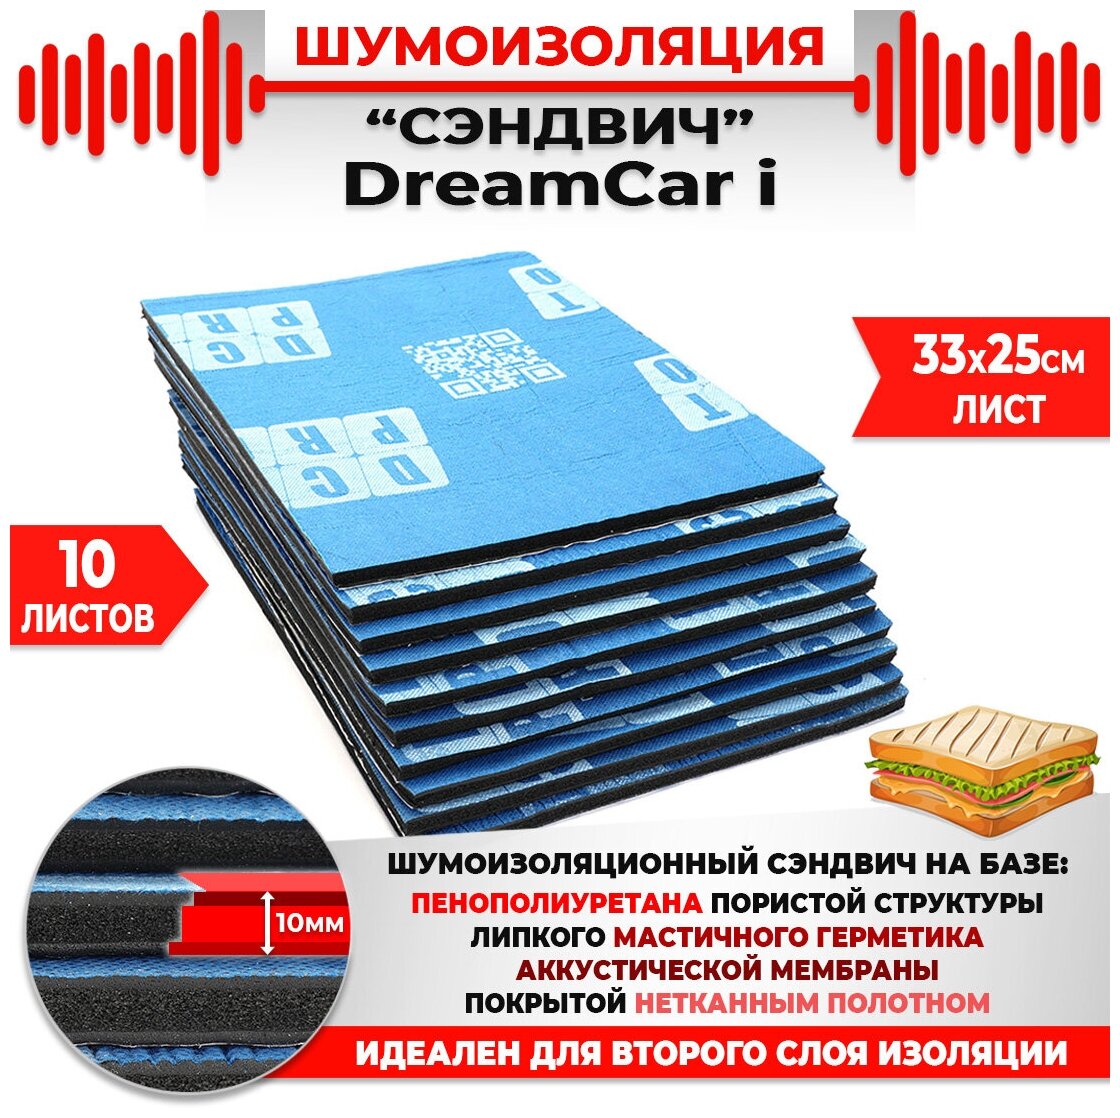 DreamCar Technology 10шт. Шумомоизоляция сэндвич Быстрого монтажа DreamCar I-Pro 33х25см 10мм 10 листов